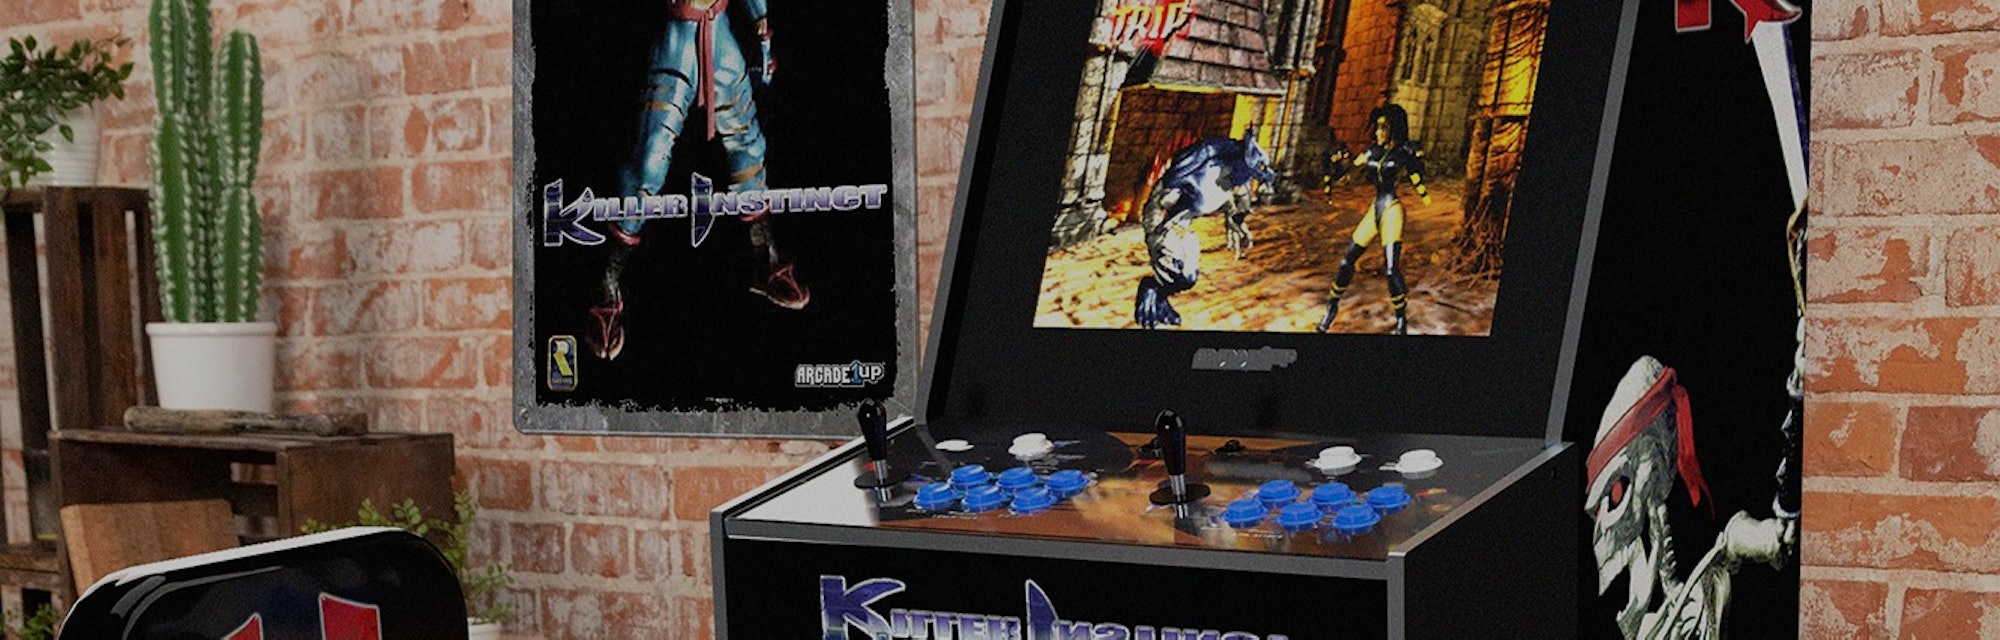 A Killer Instinct Arcade1Up cabinet